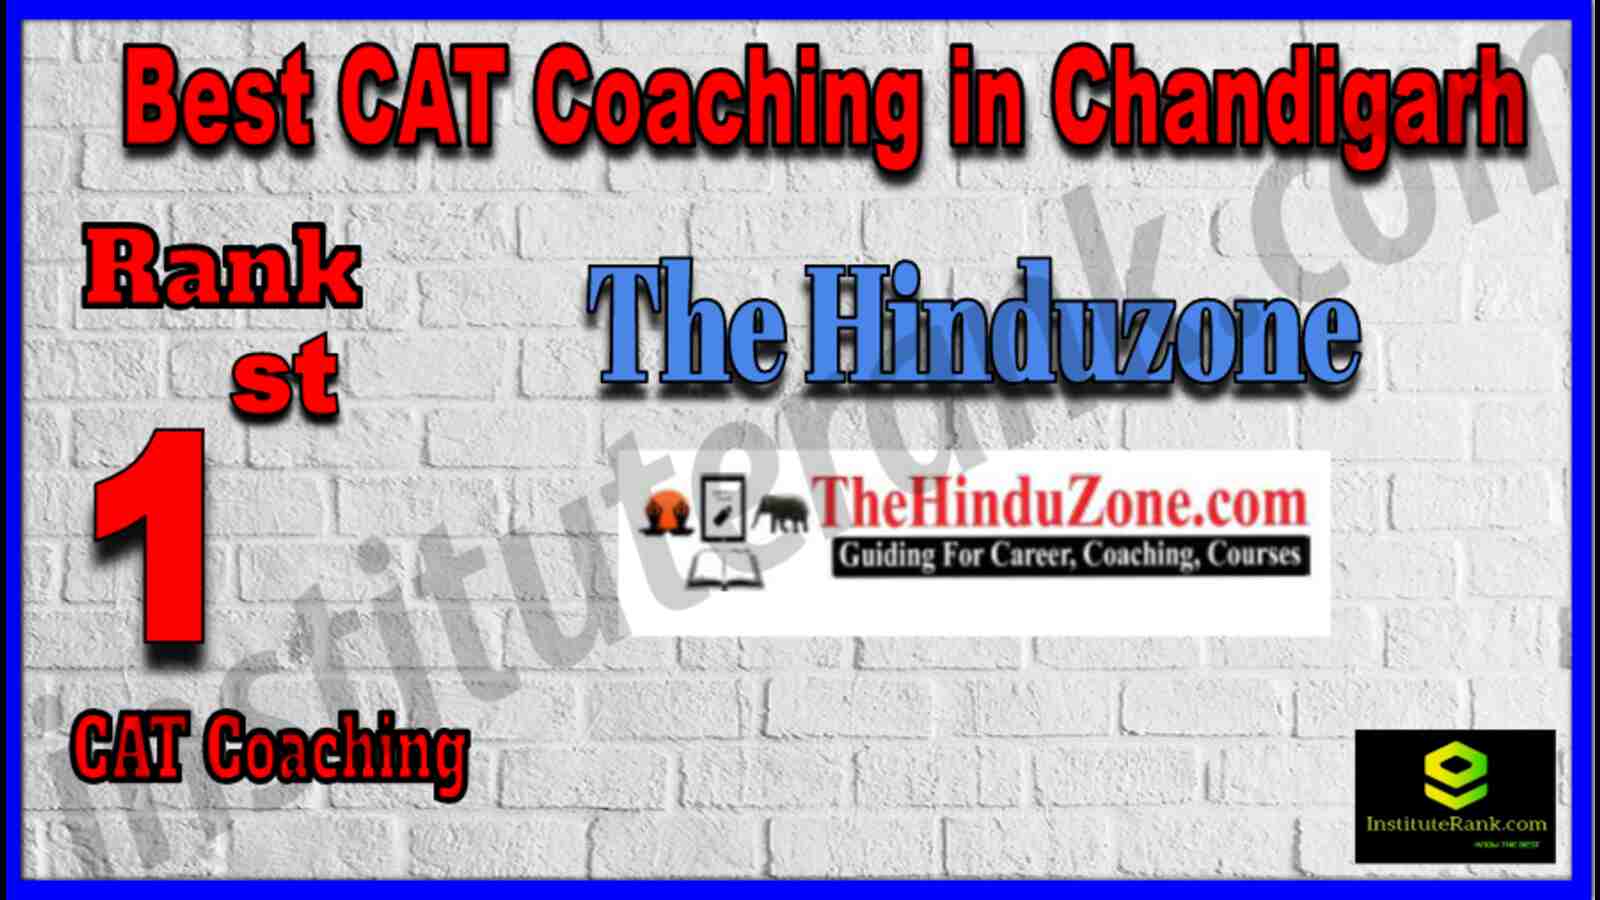 Rank 1 Best CAT Coaching in Chandigarh